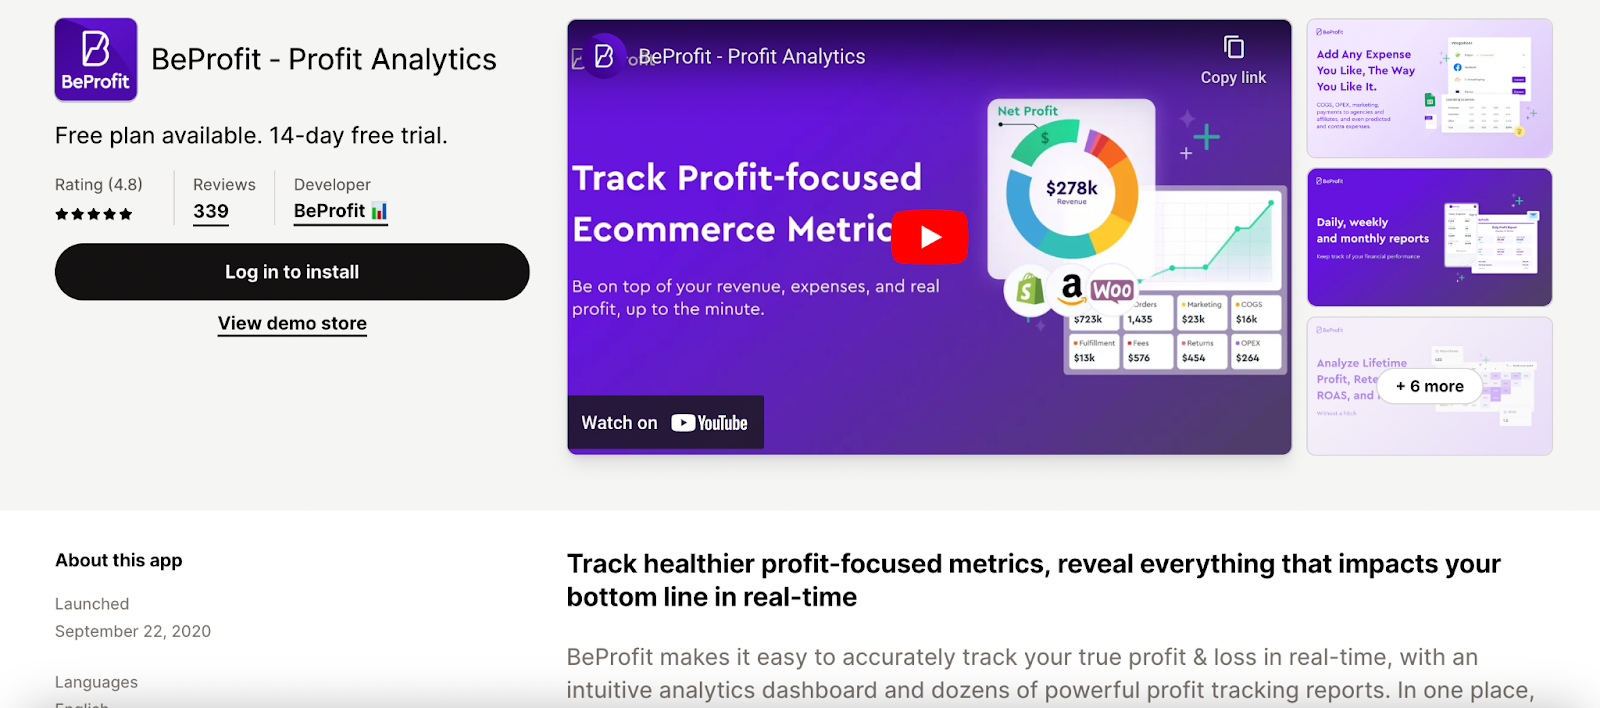 BeProfit - Profit Analytics